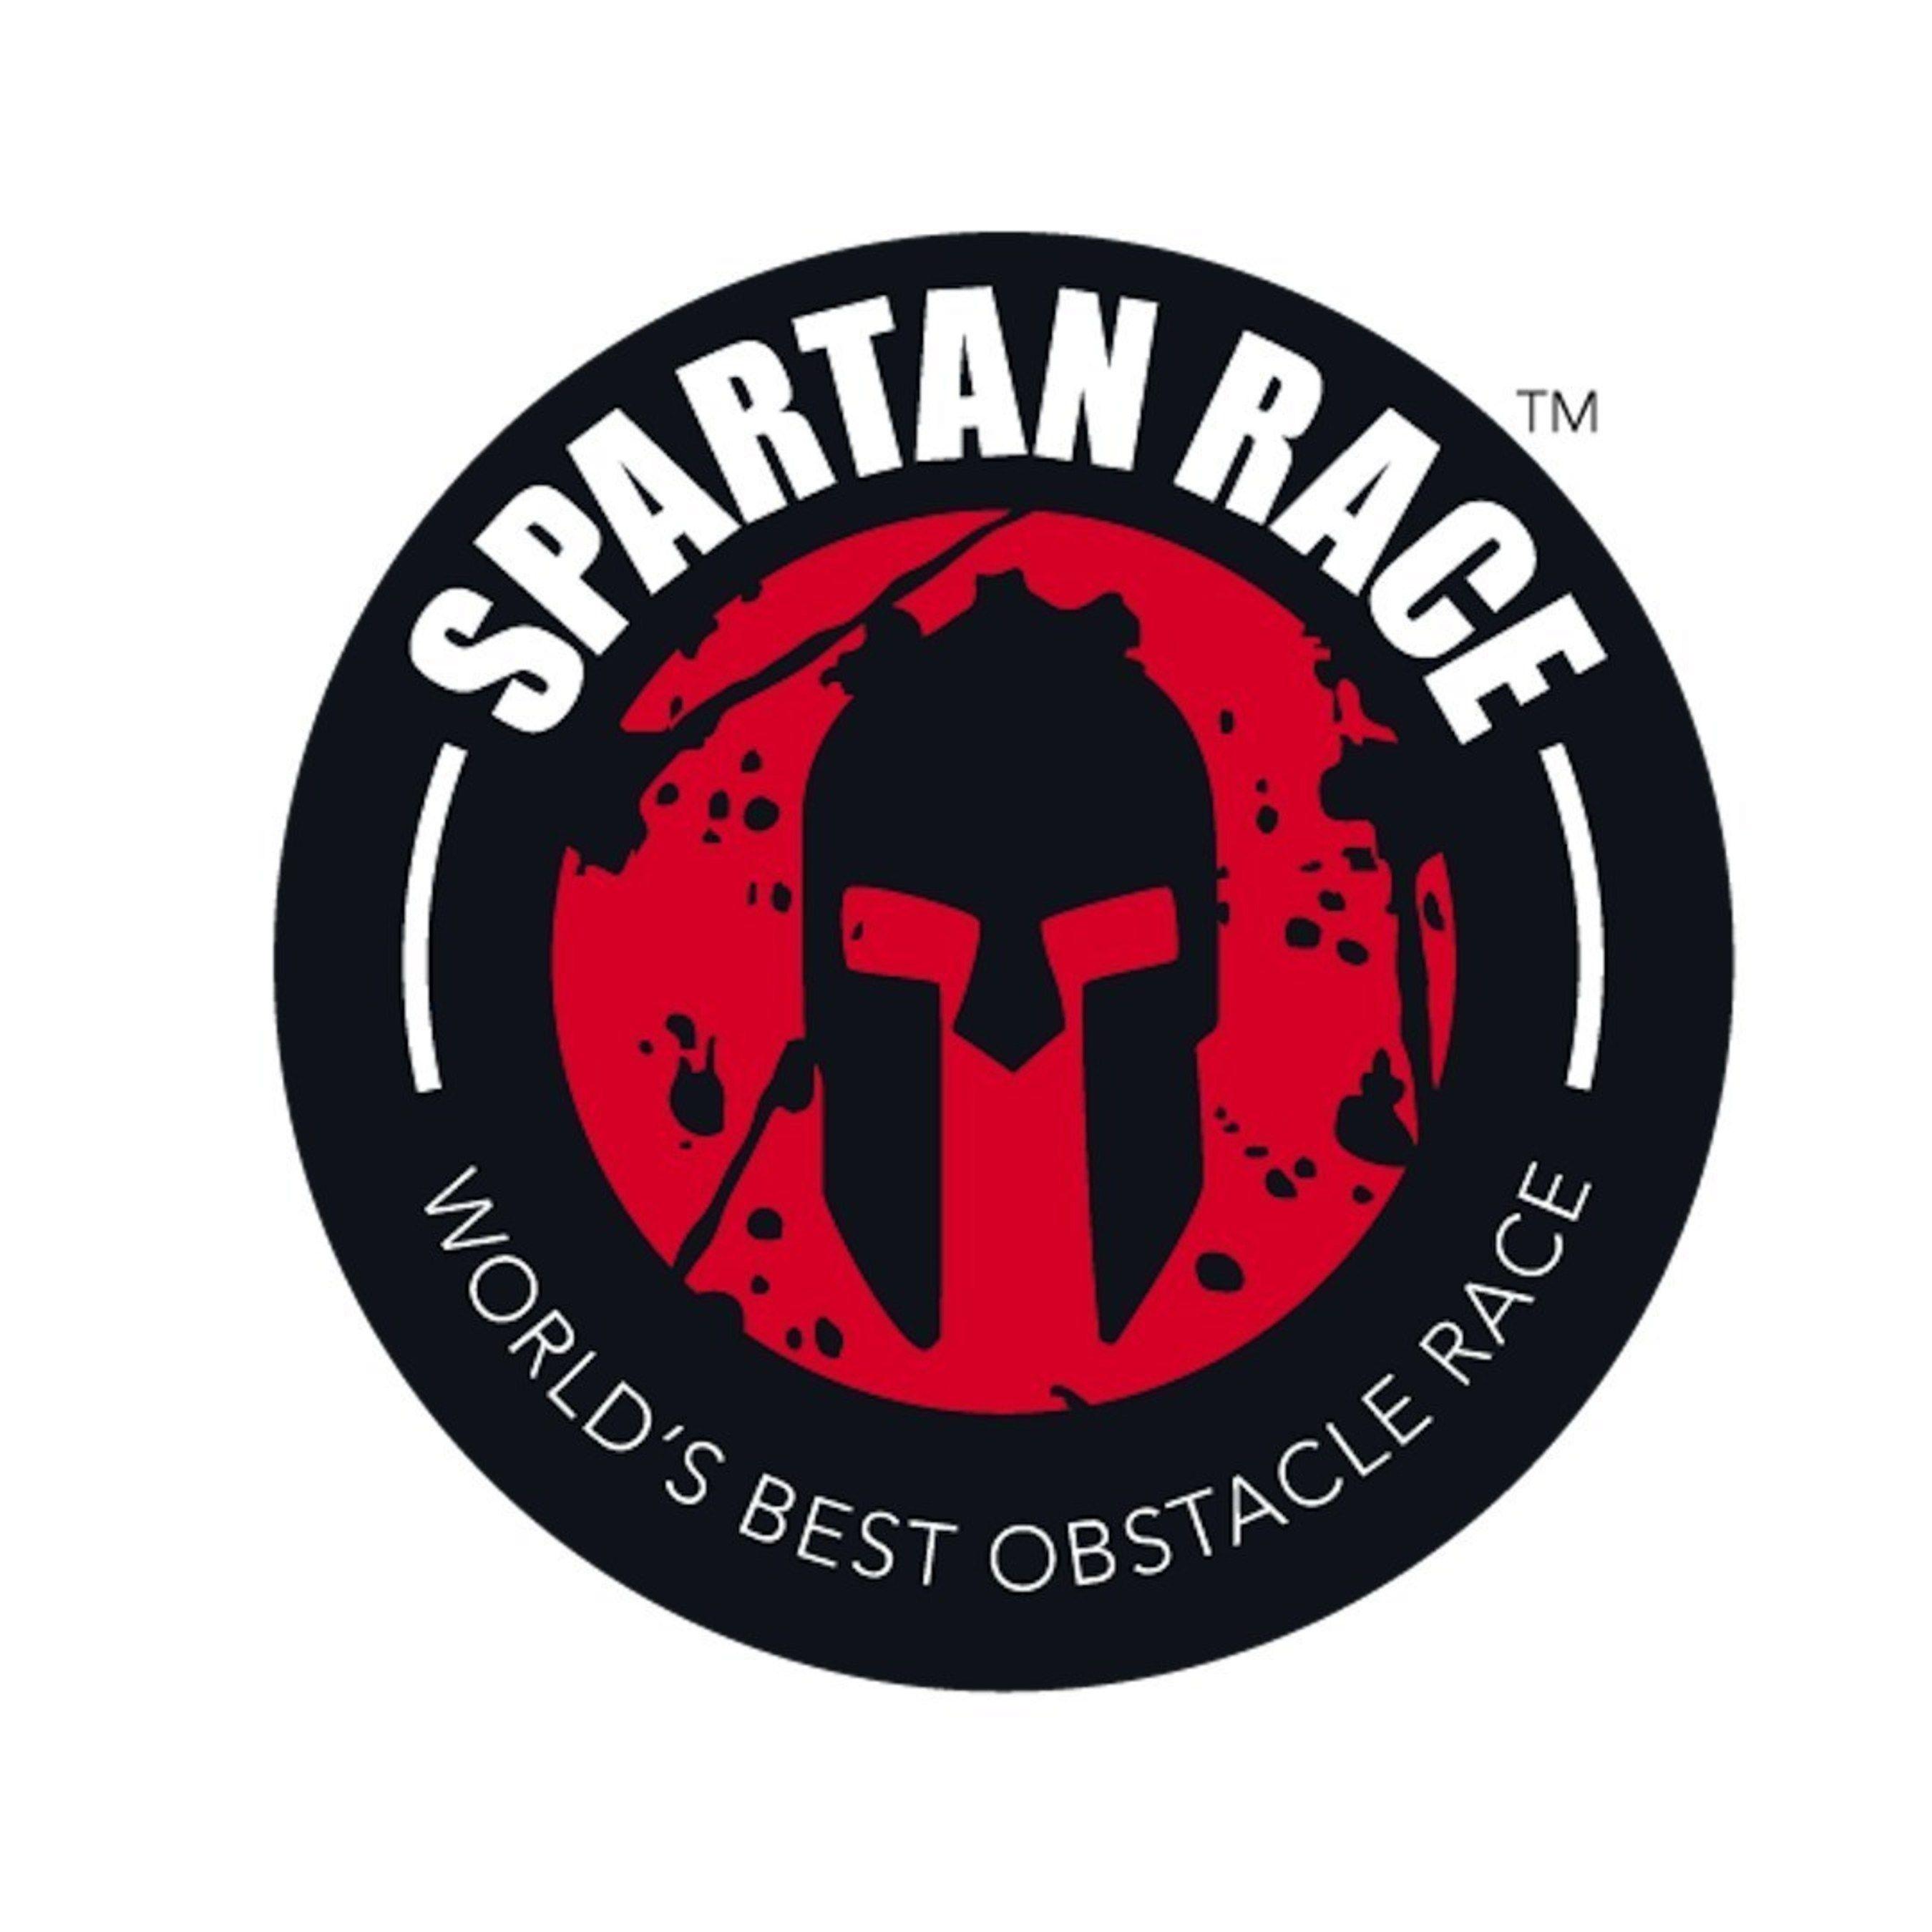 Spartan Race Logo - Spartan Race Announces Strategic Investment By Hearst